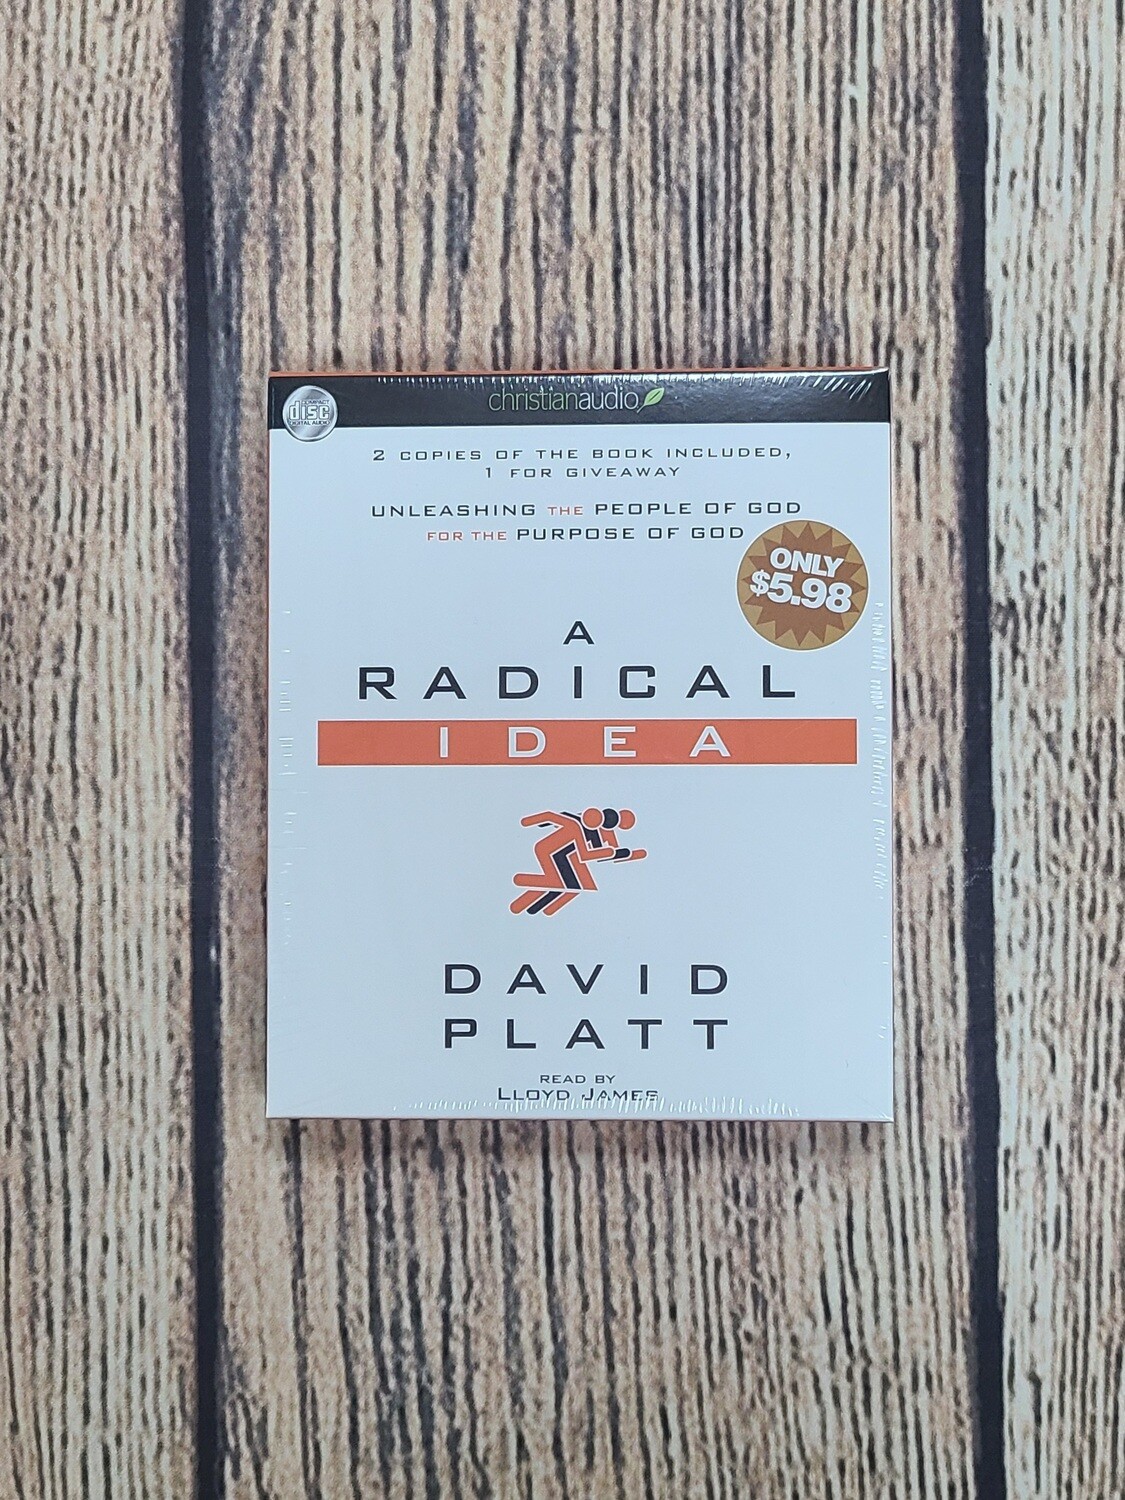 A Radical Idea by David Platt